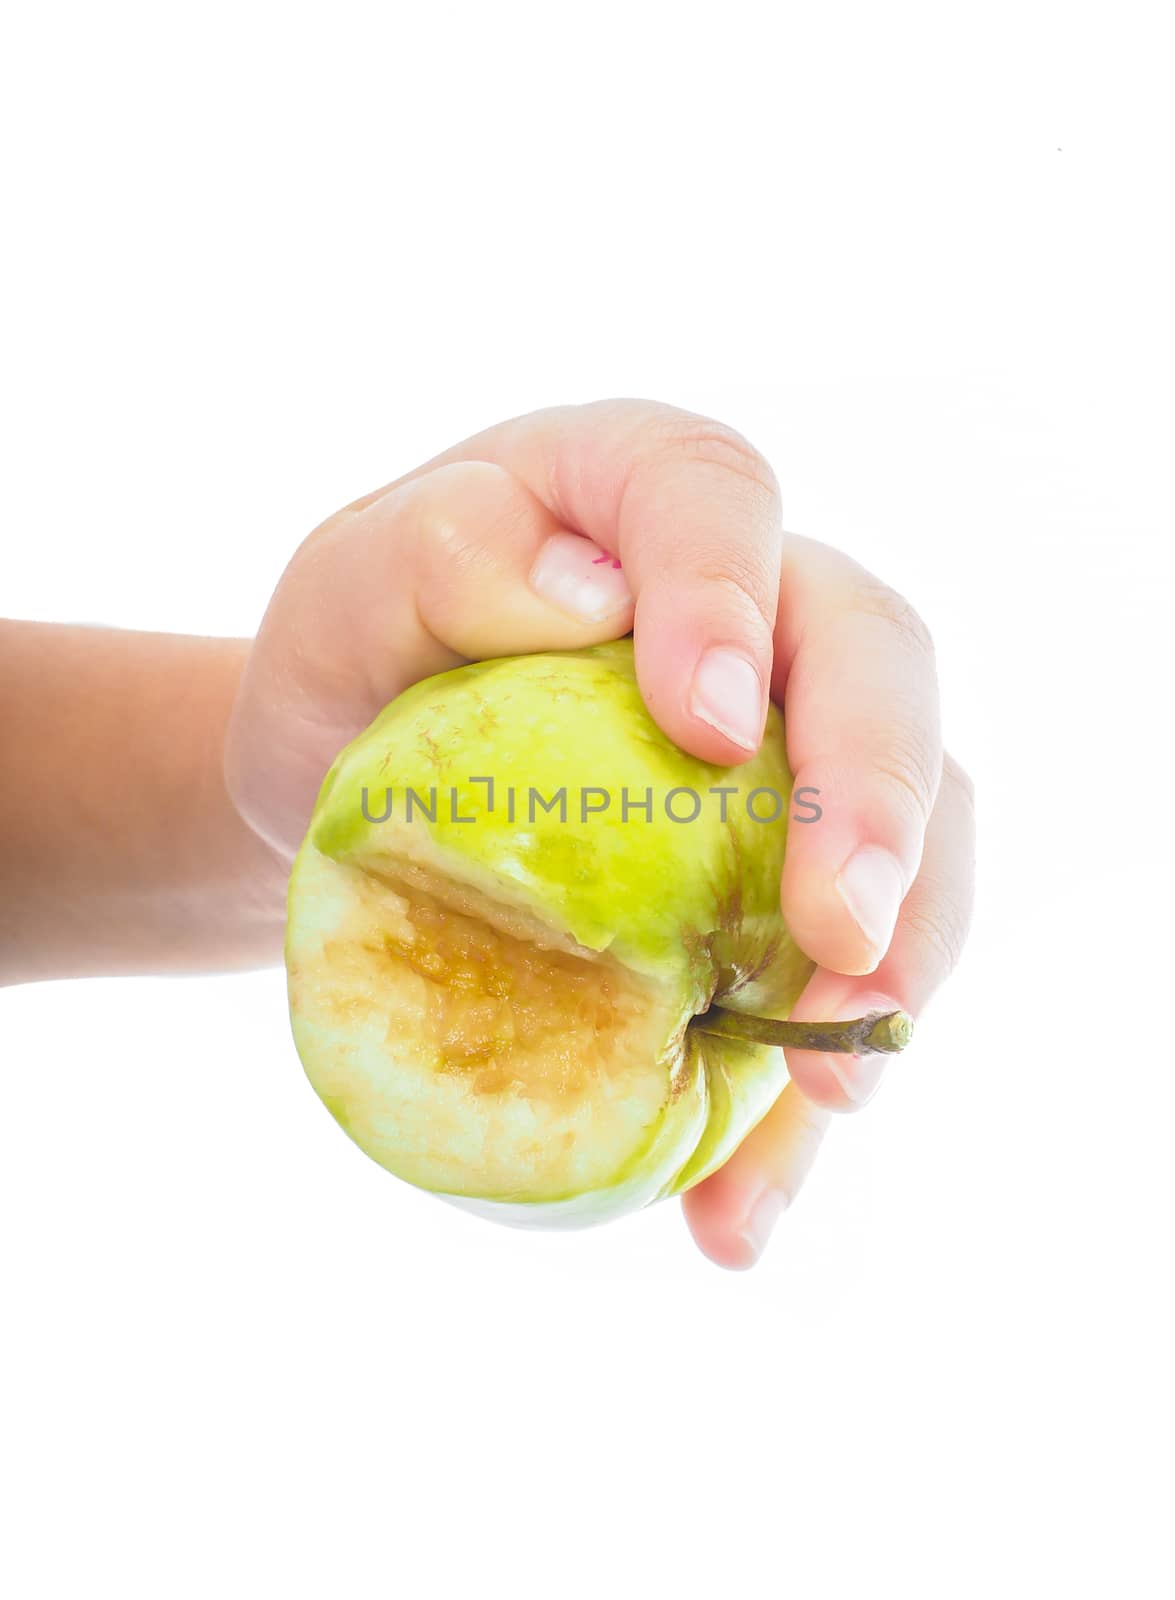 Little childs hand holding an unripe green apple towards white by Arvebettum